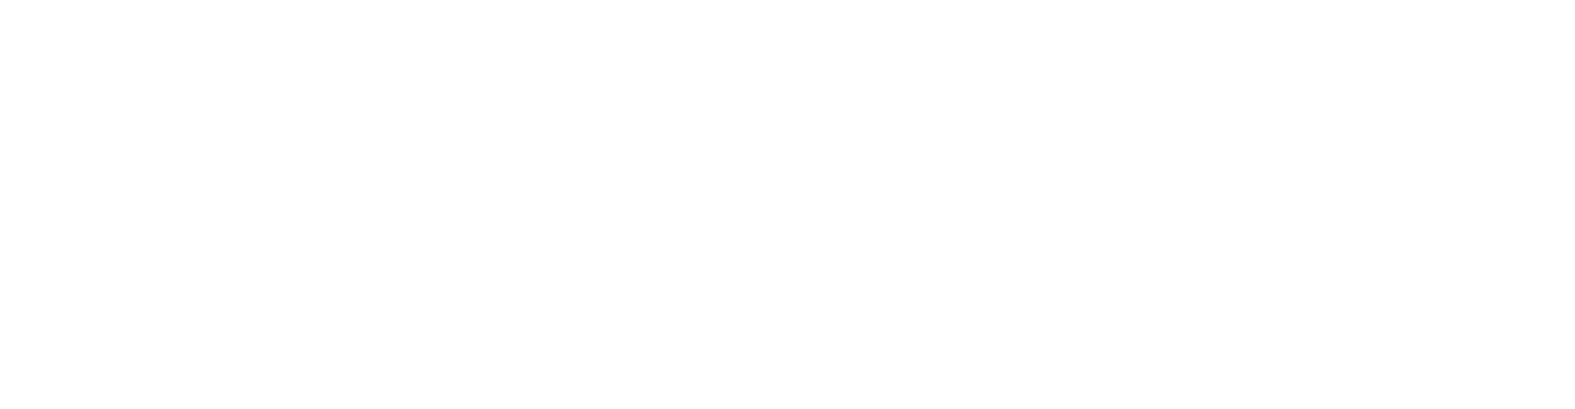 Montea Comm logo for dark backgrounds (transparent PNG)